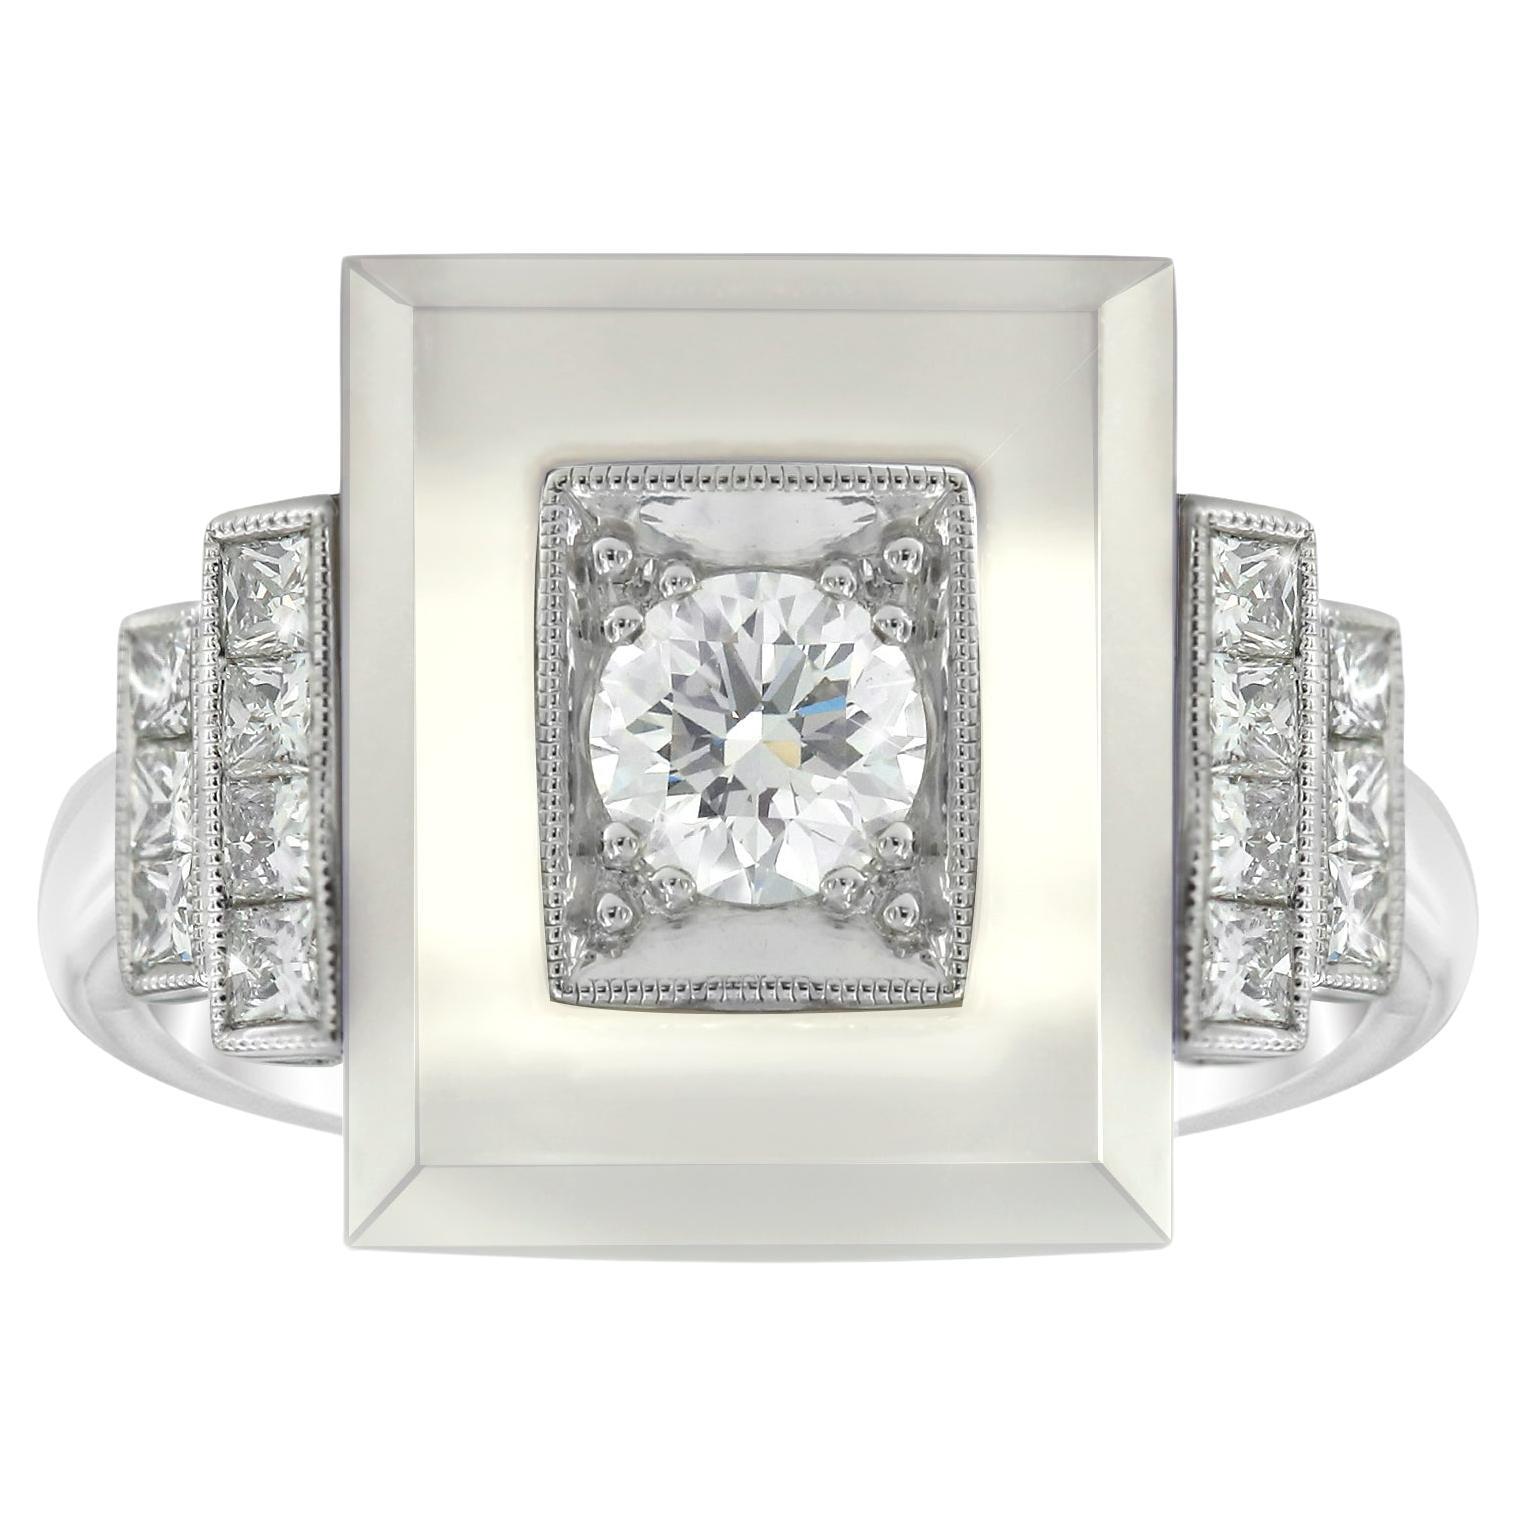 Gerard McCabe "Savoir-faire Collect" - White quartz and diamond ring, 18ct. For Sale